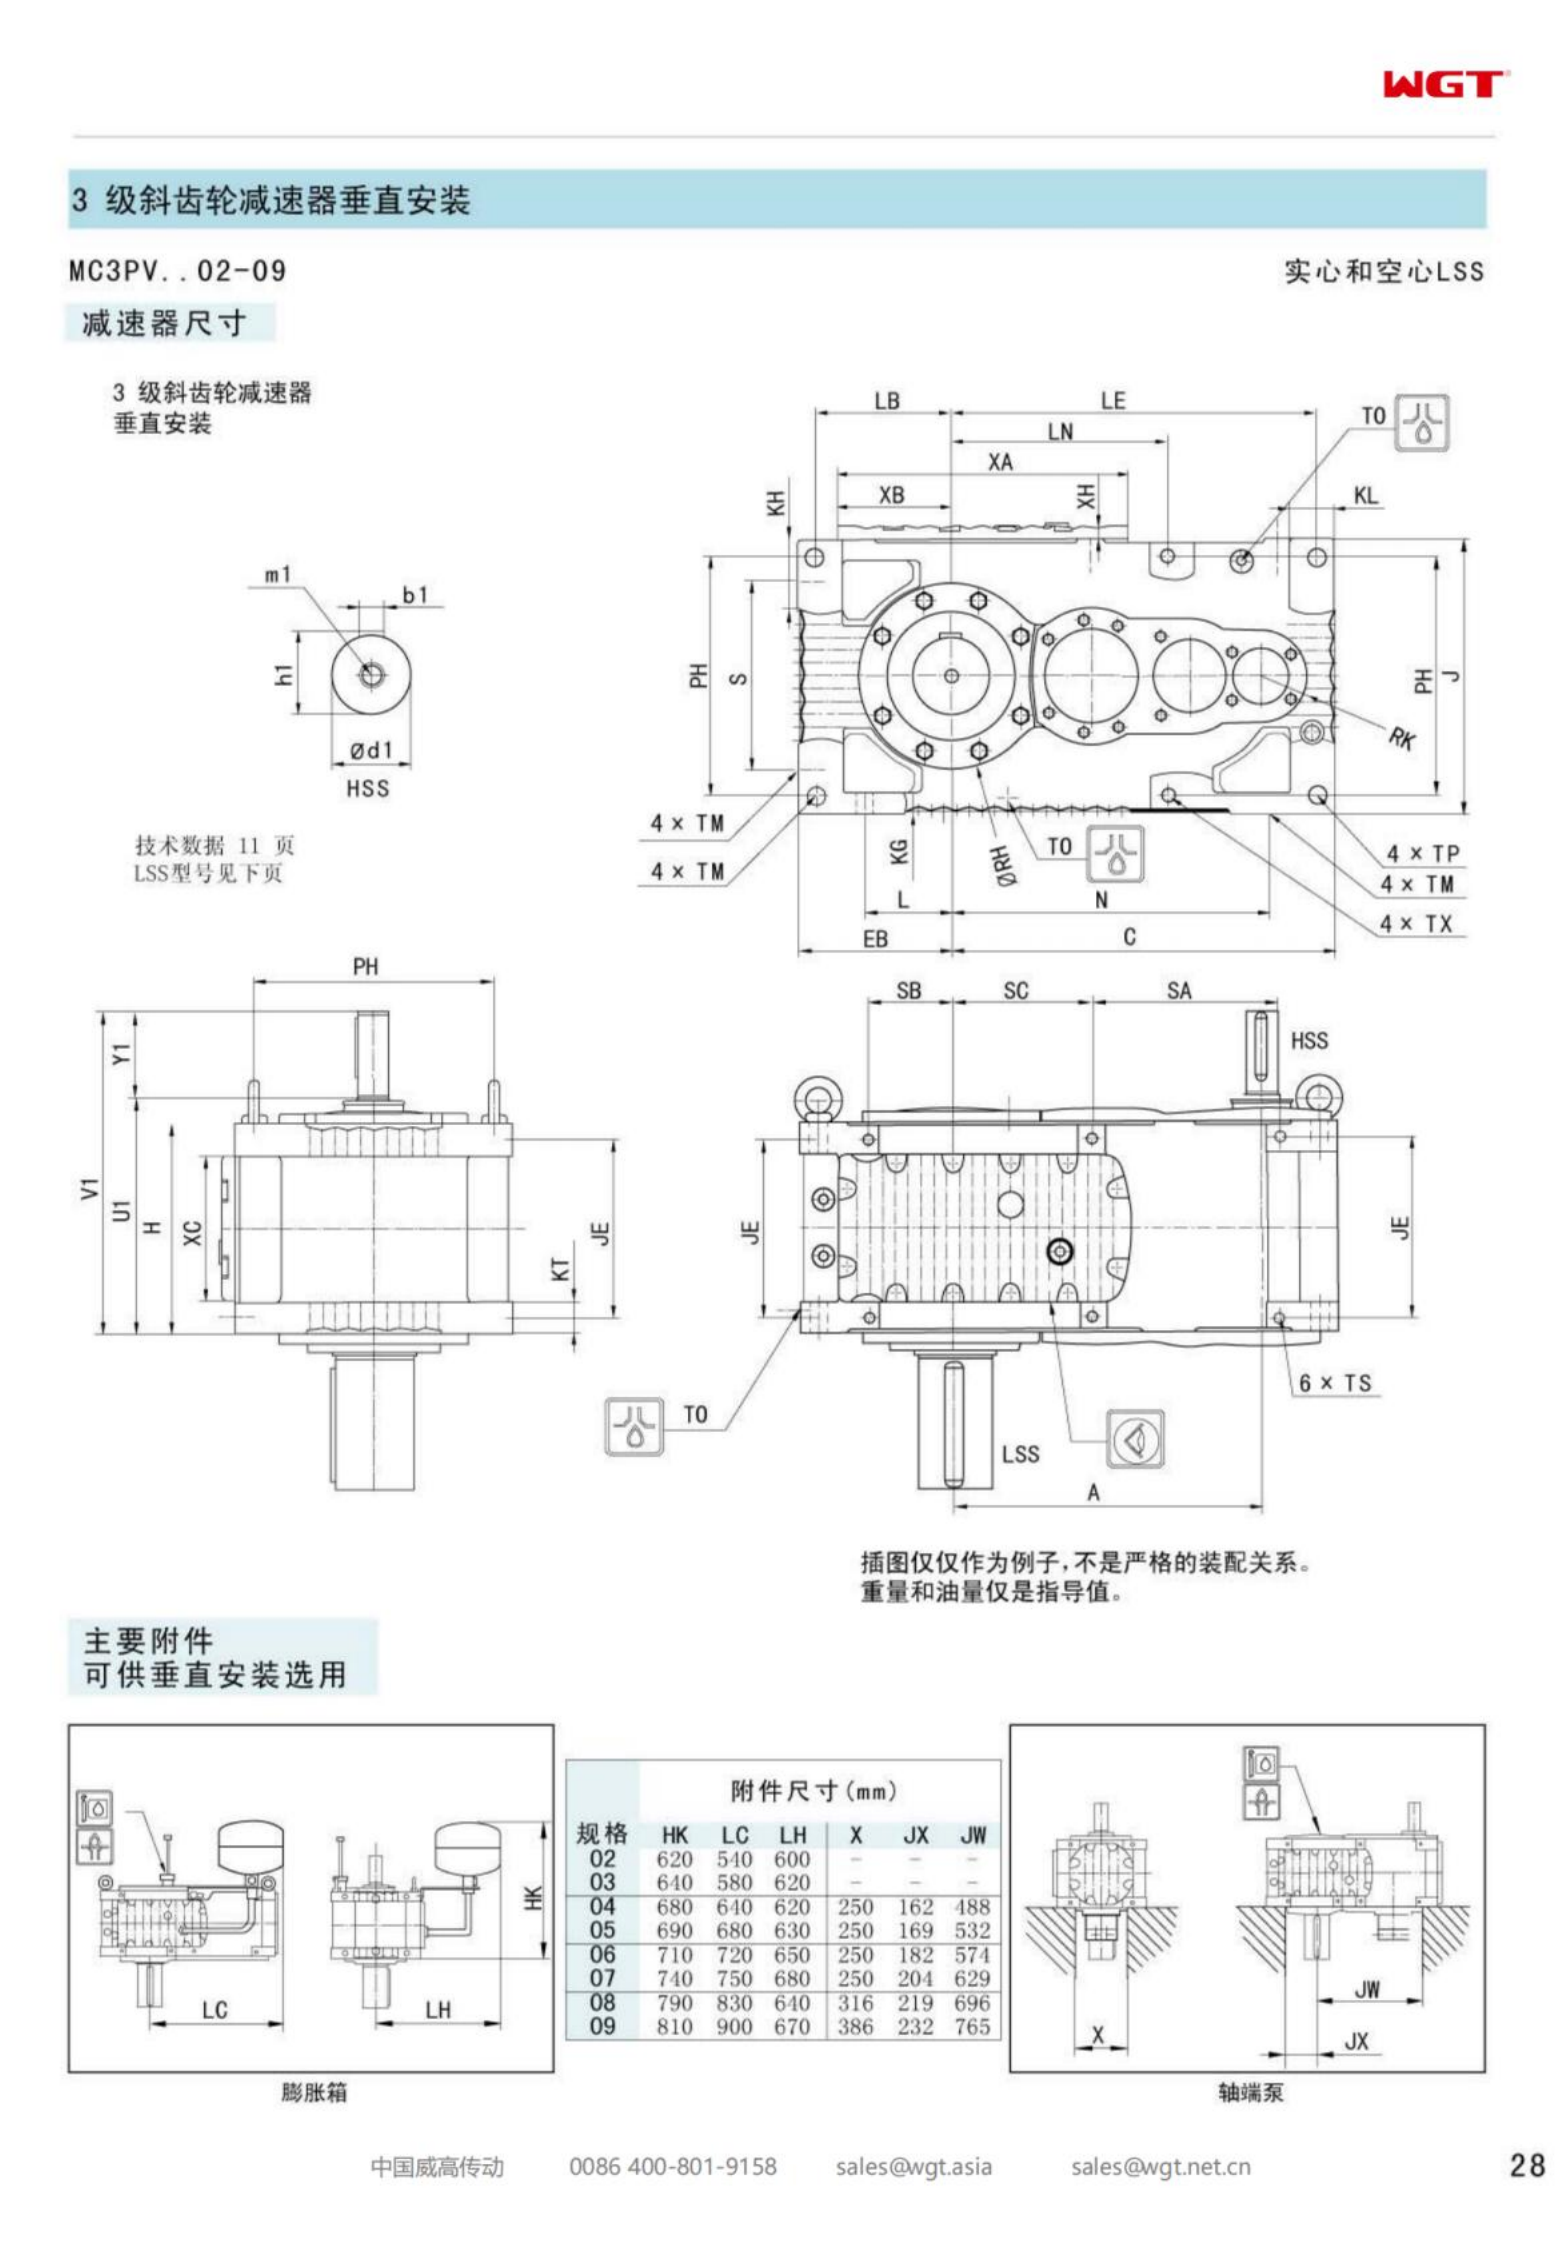 MC3PVST02 replaces _SEW_MC_Series gearbox (patent)